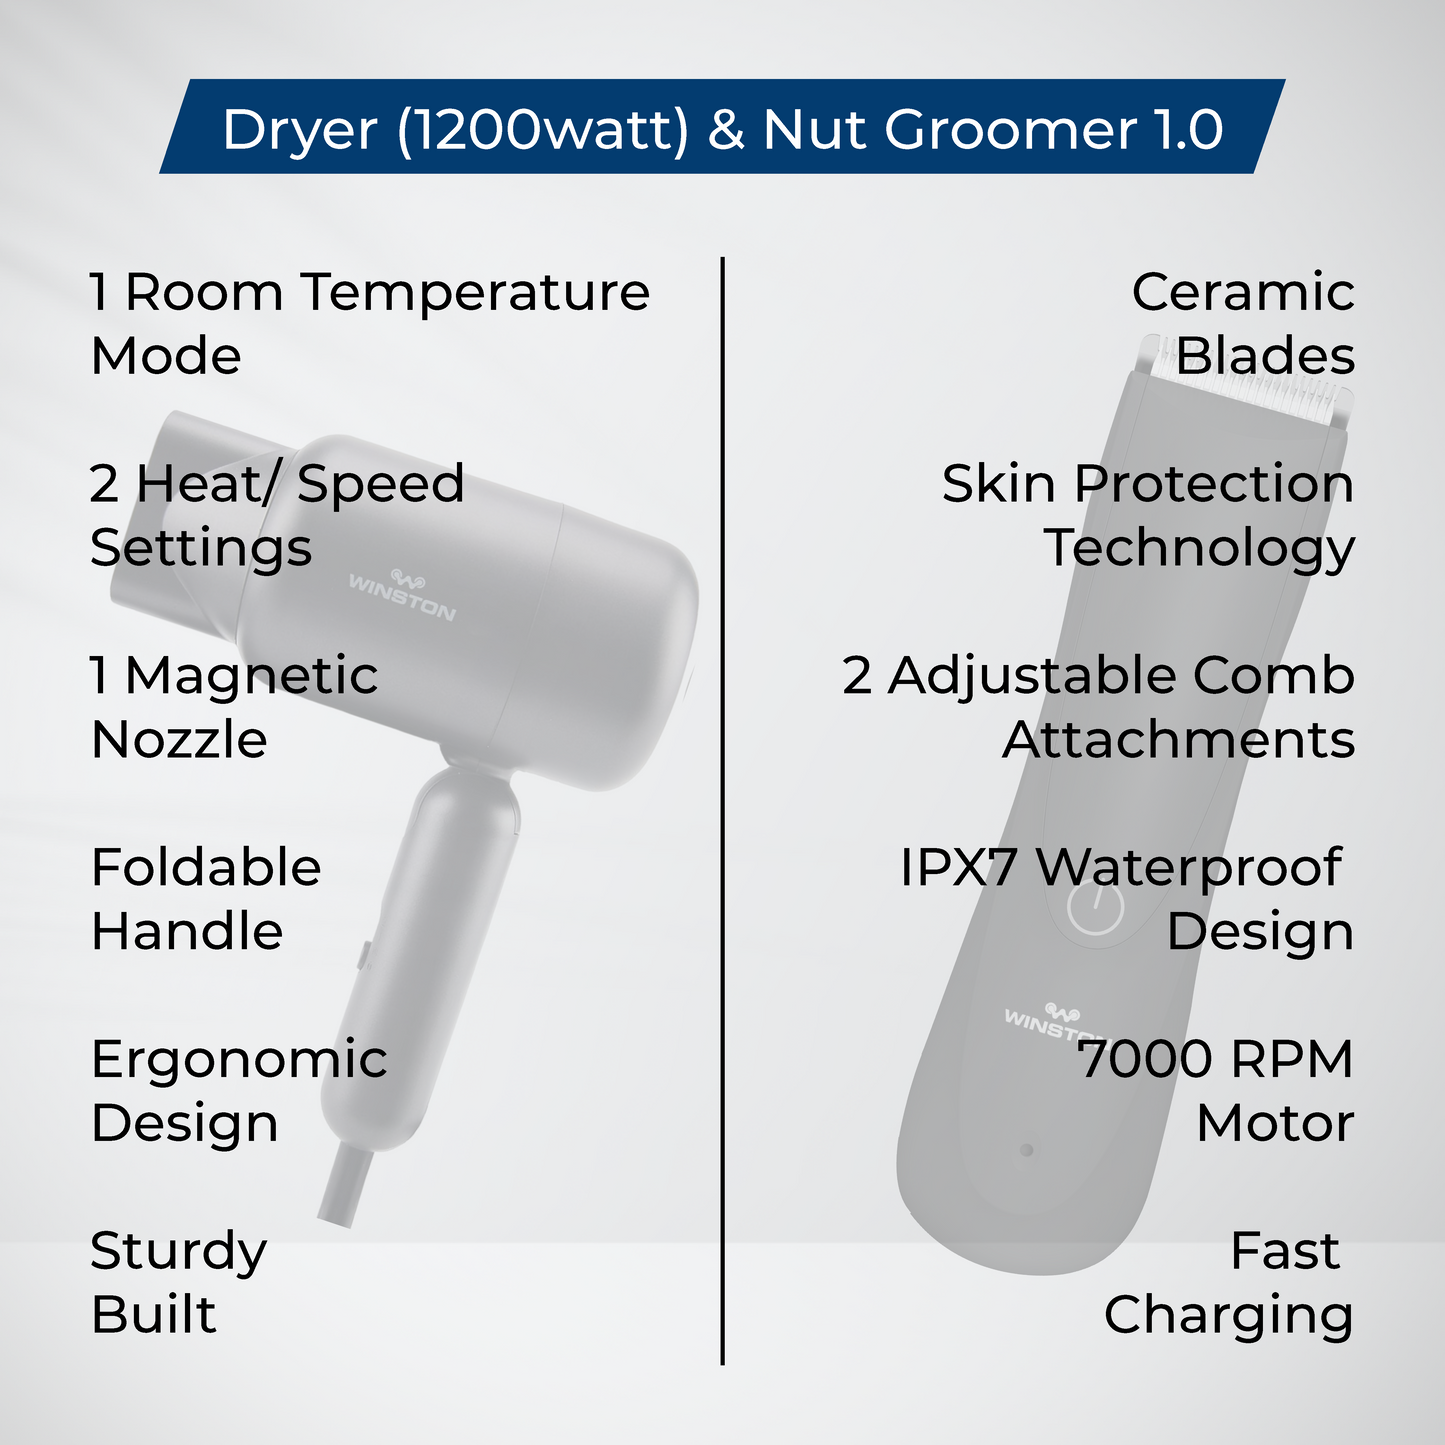 Dryer (1200watt) & Nut Groomer 1.0 Combo